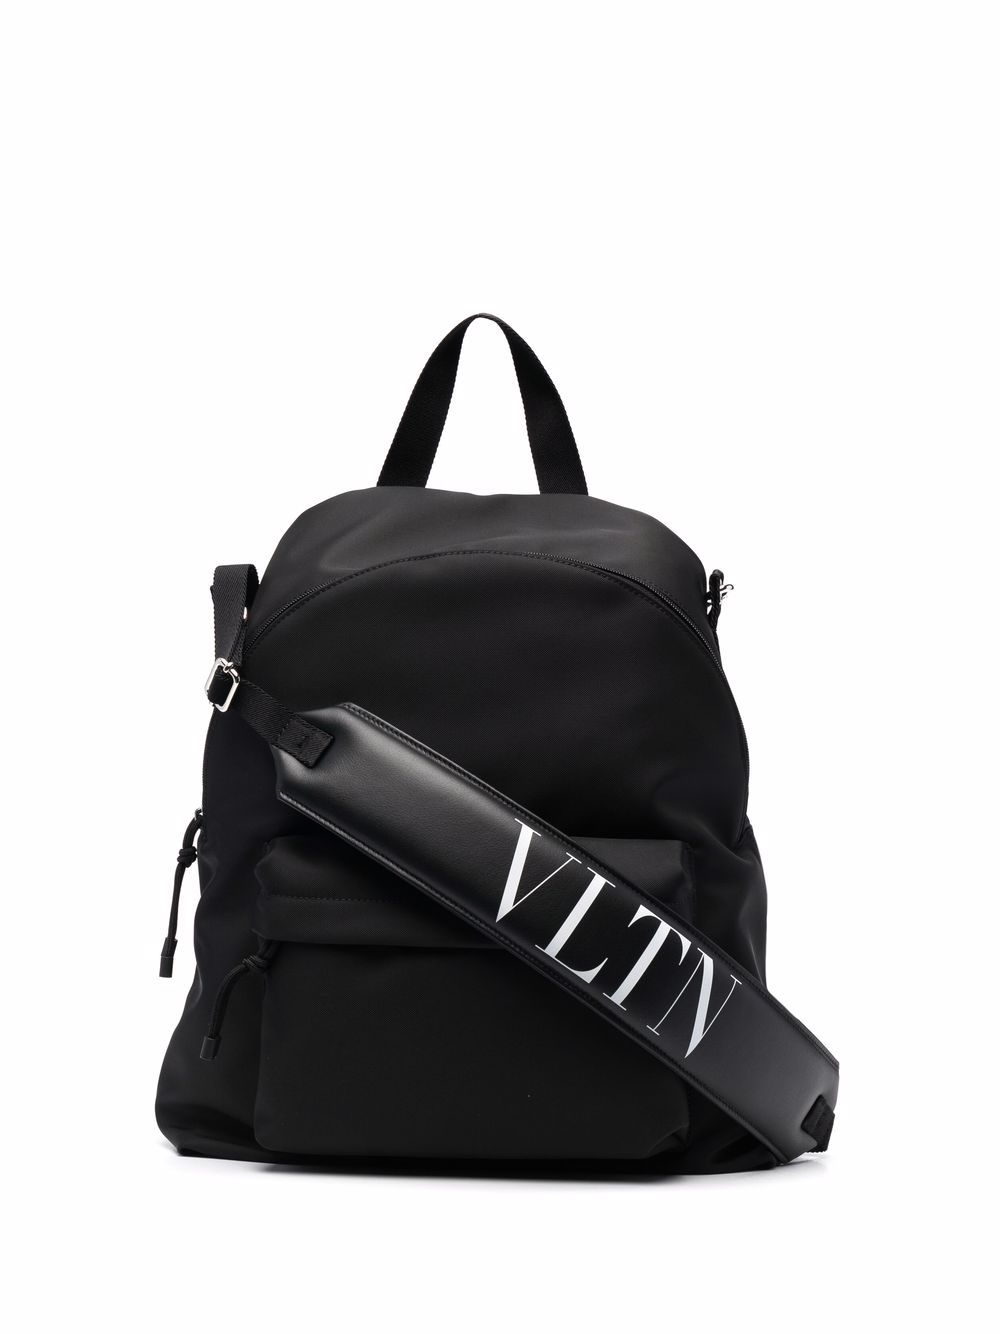 Backpacks Valentino Garavani - VLTN nylon and leather backpack -  QY2B0340YJM0NI